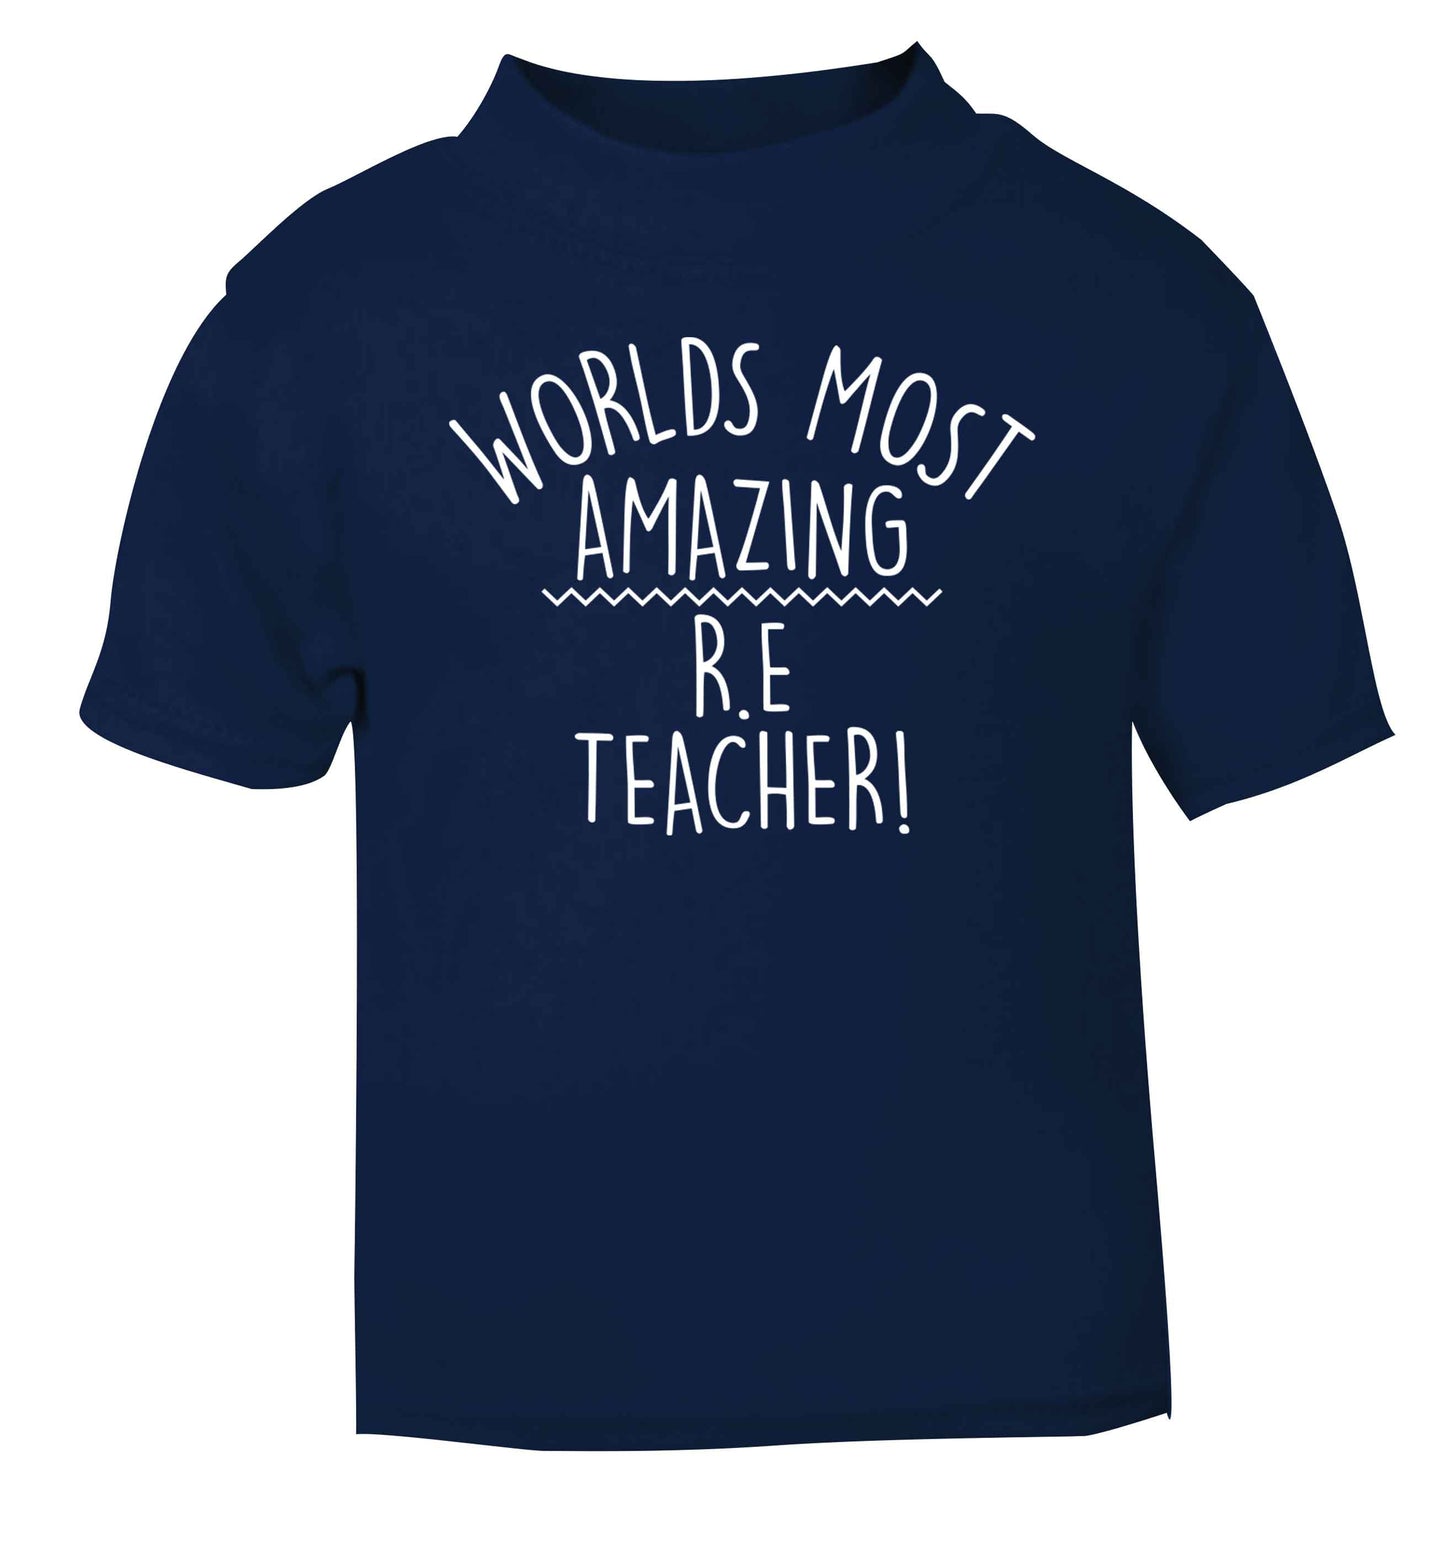 Worlds most amazing R.E teacher navy baby toddler Tshirt 2 Years